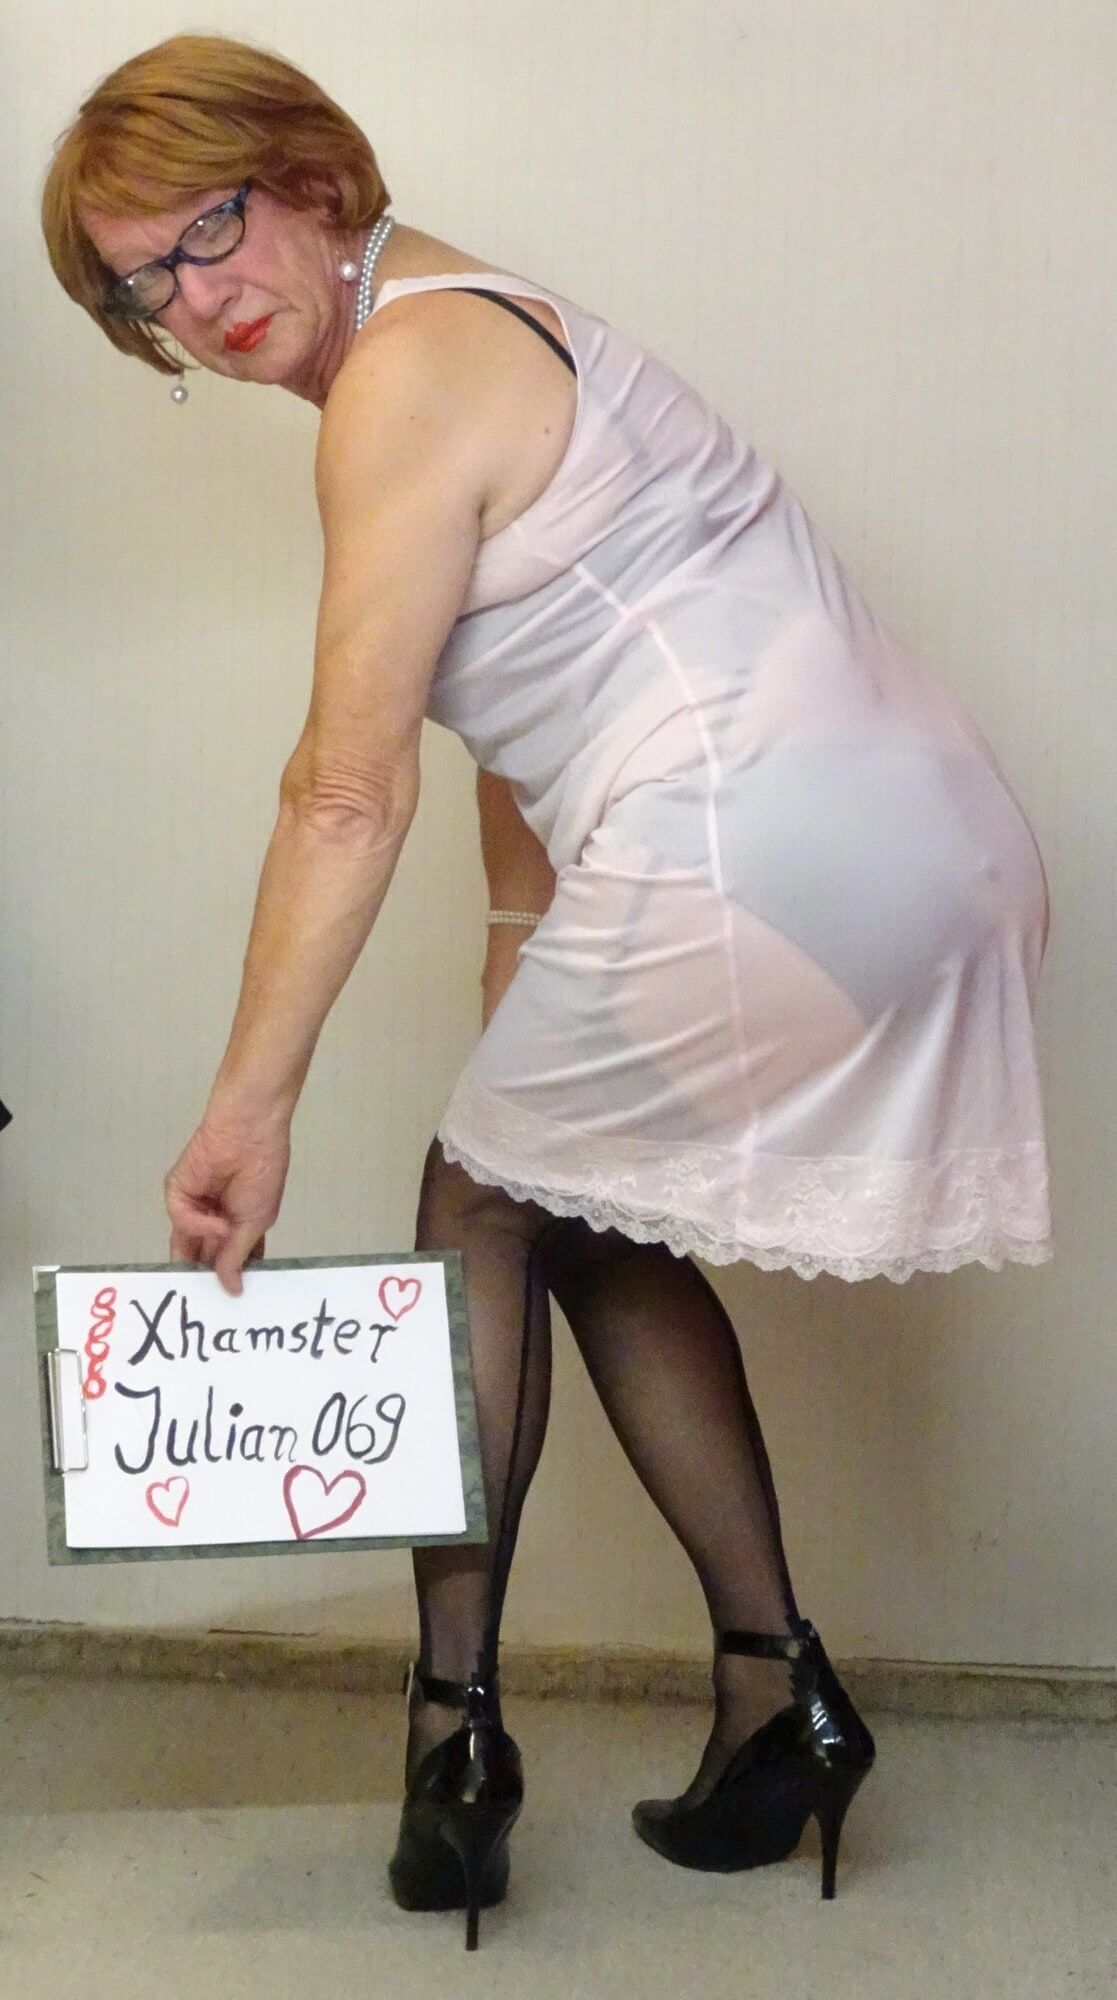 Julian069 to be a lady #26